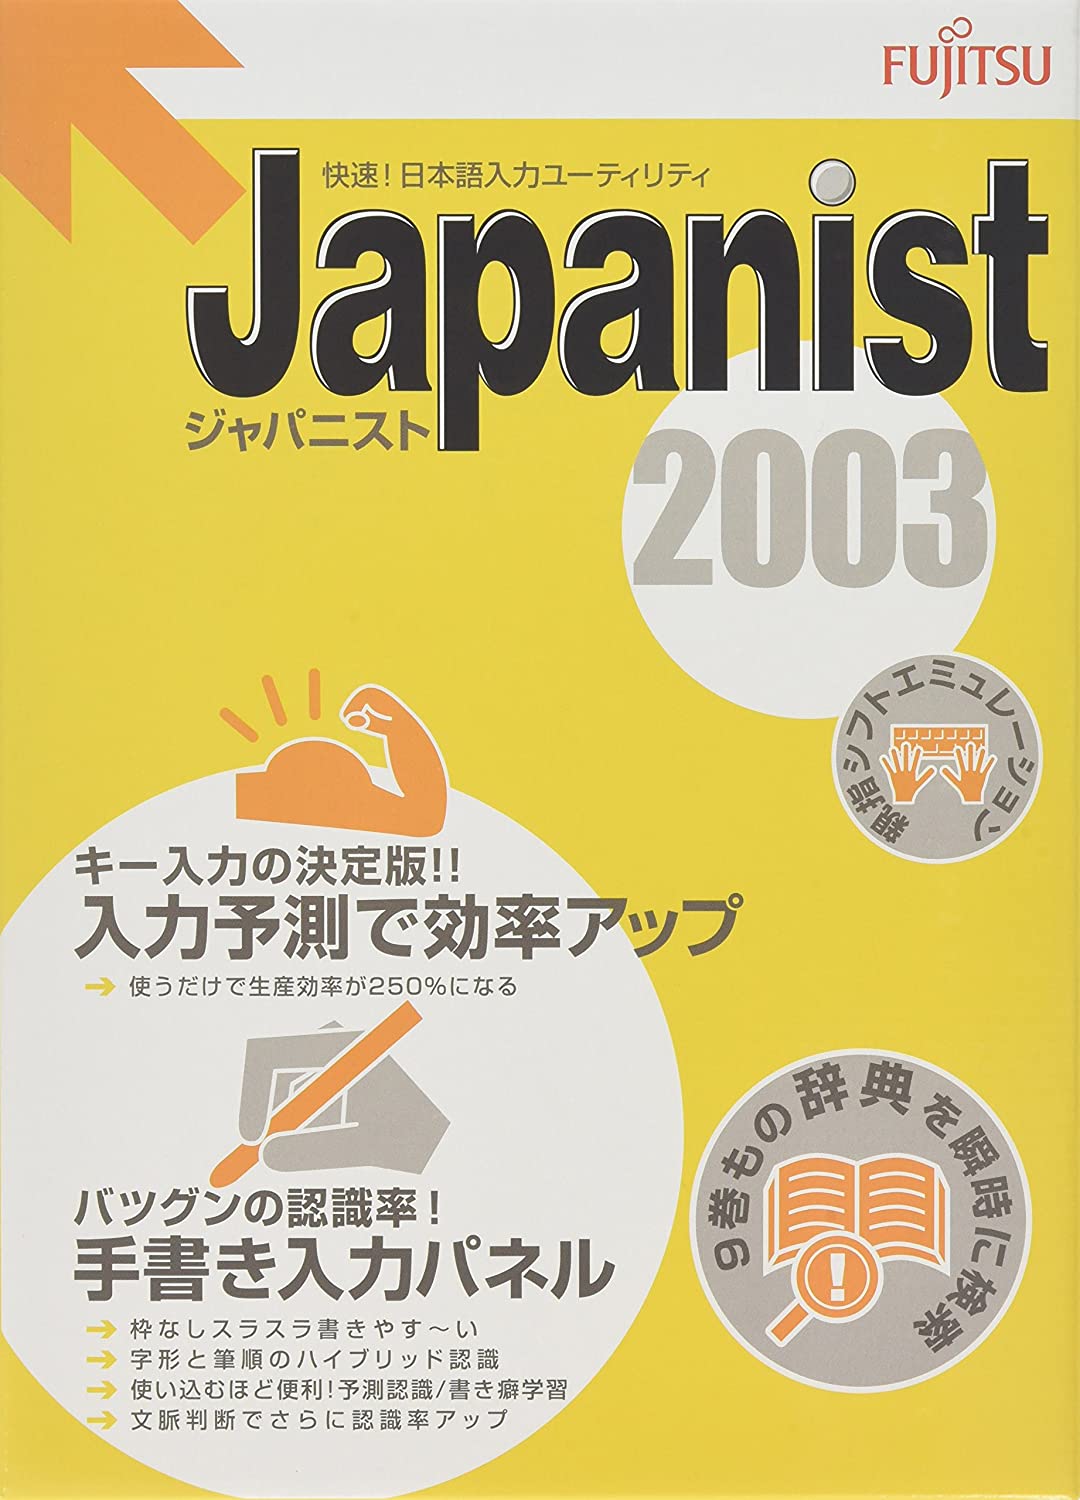 Japanist 2003